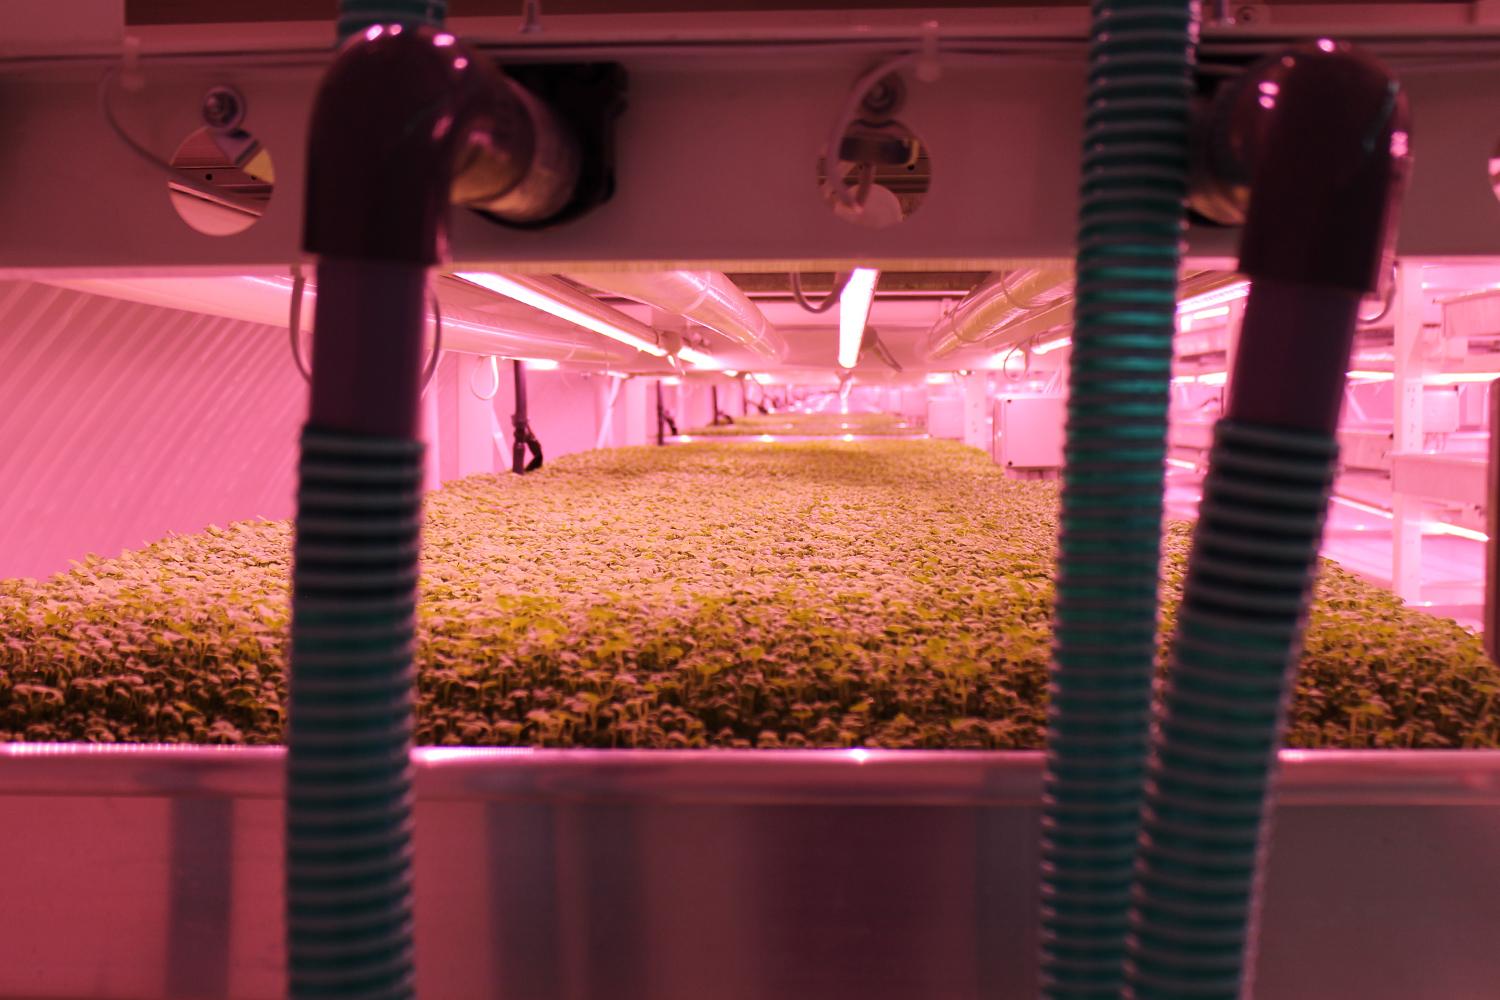 londons underground farm zero carbon food growing tables